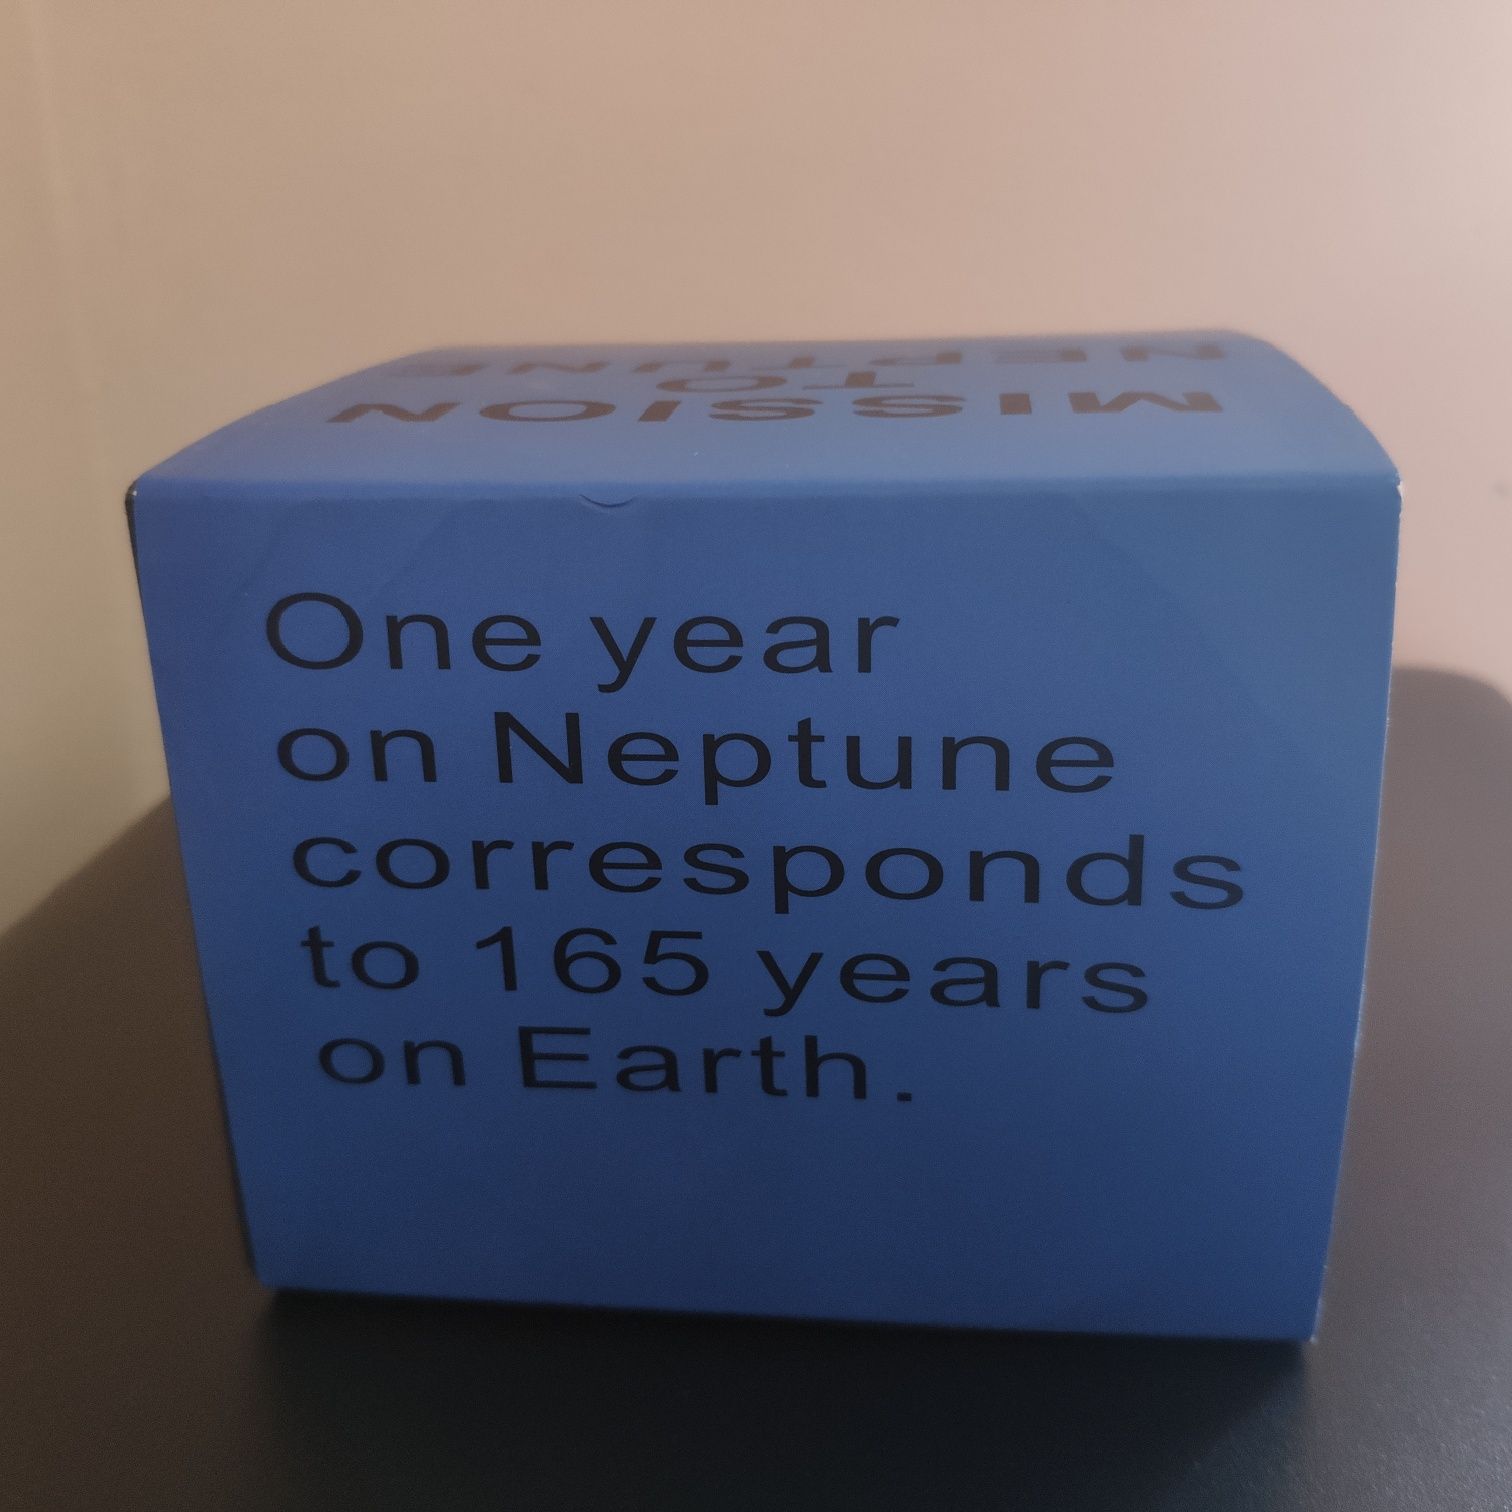 Caixa de relógio Mission to Neptune